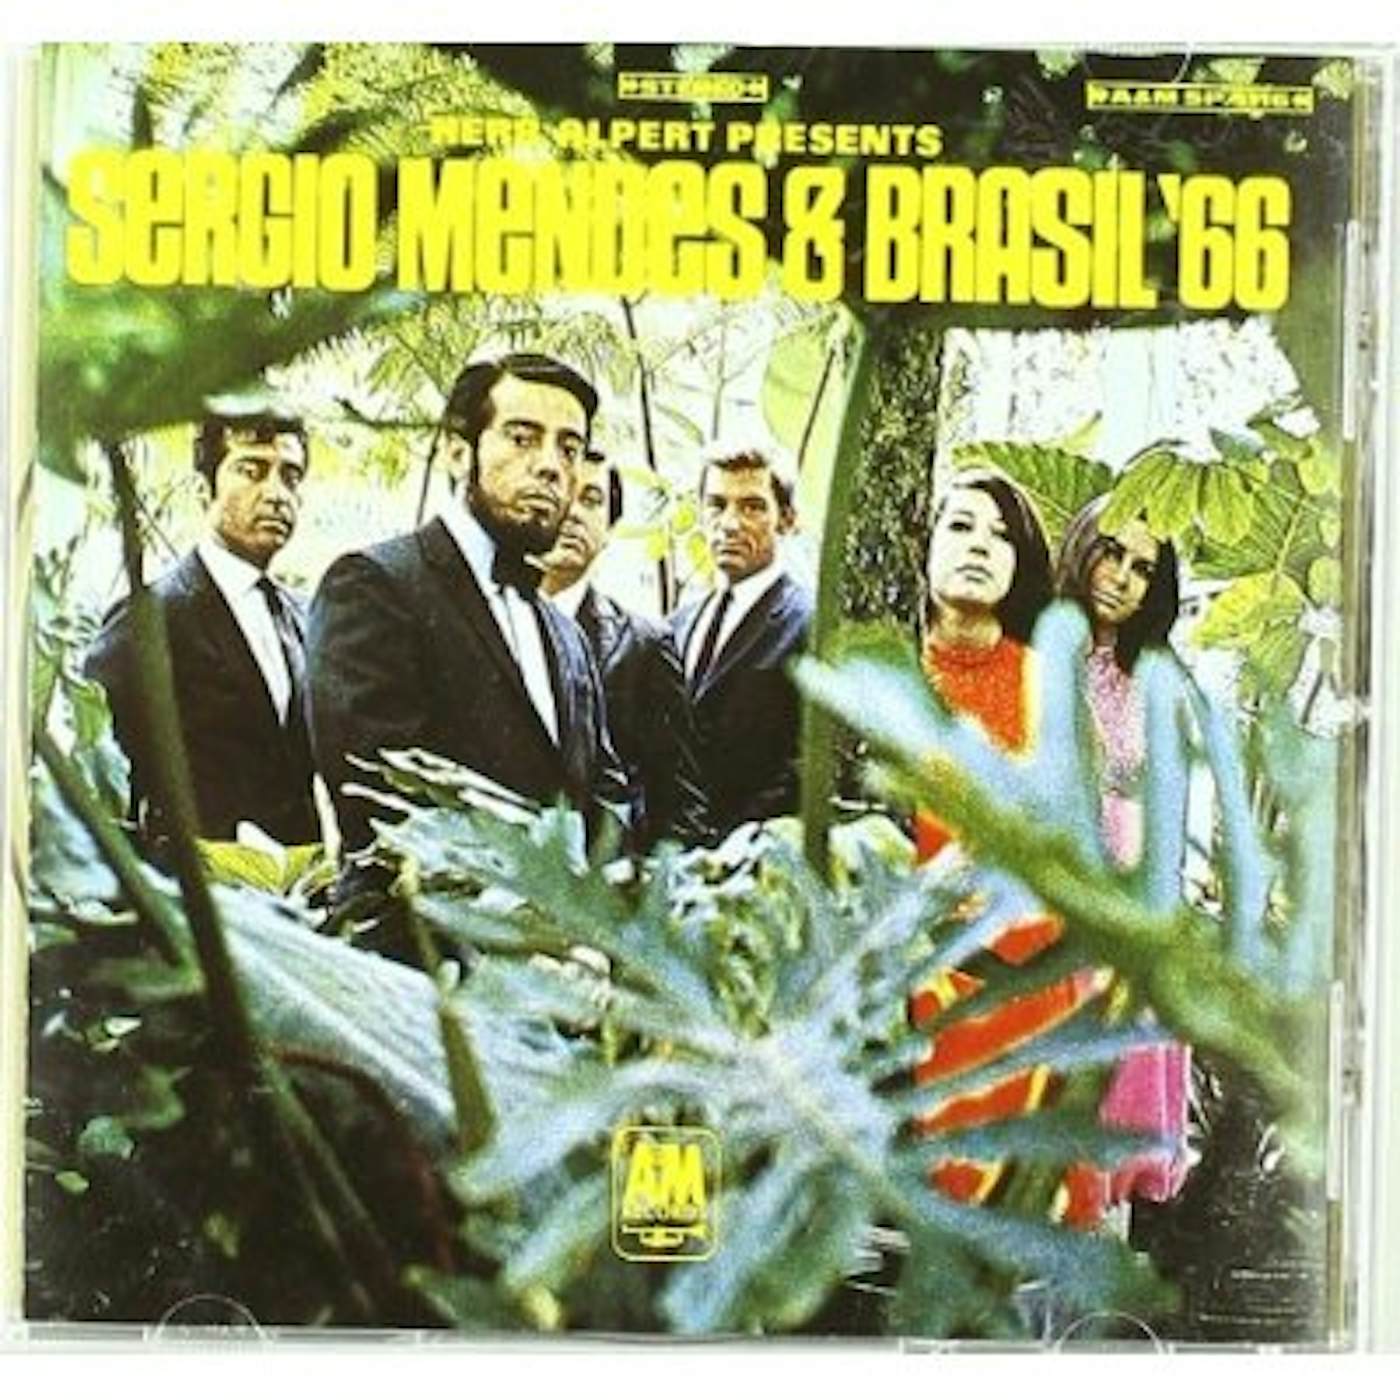 Sergio Mendes & Brasil '66 HERB ALPERT PRESENTS CD